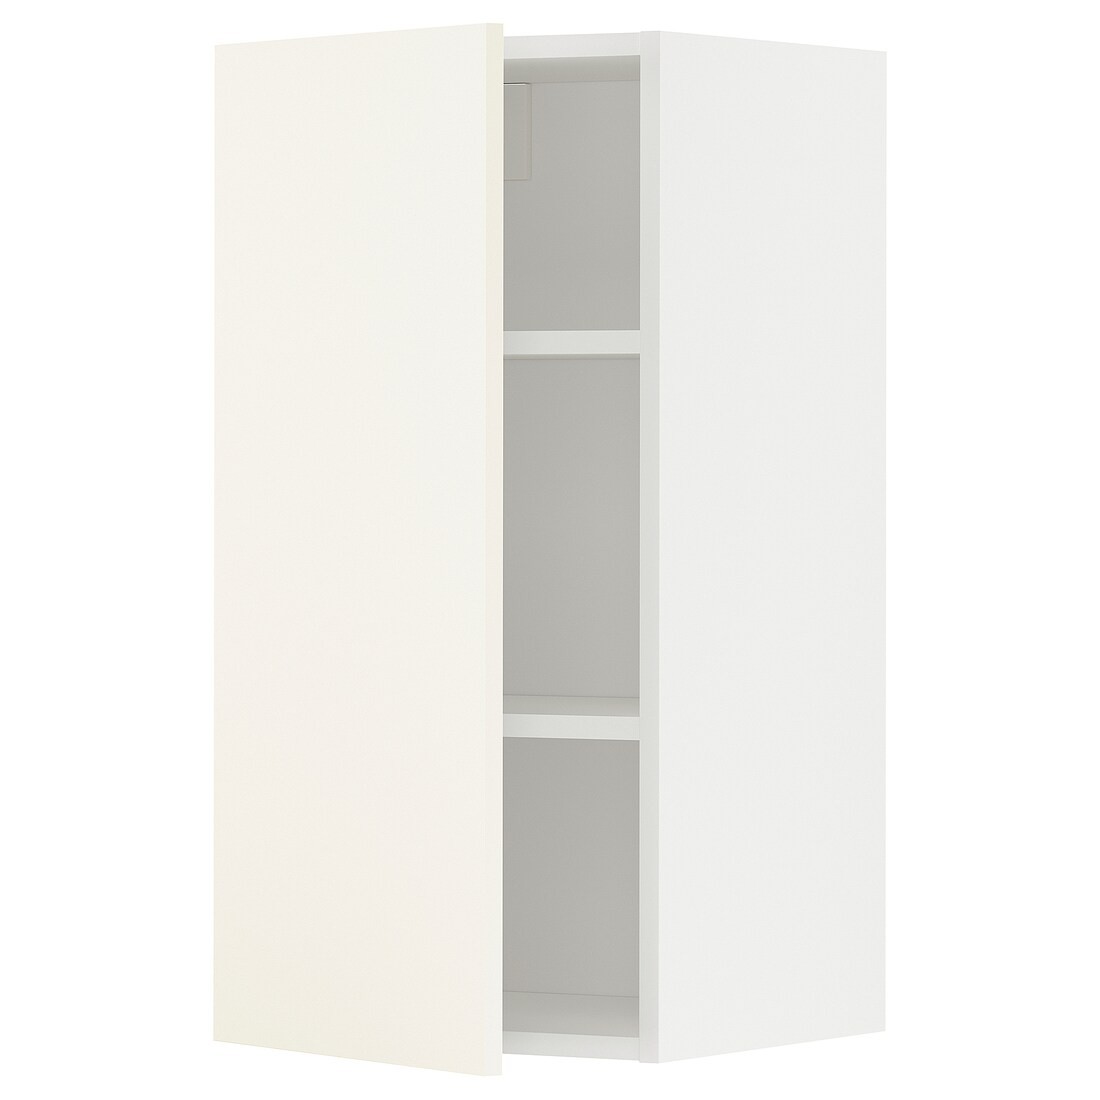 IKEA METOD МЕТОД Шкаф навесной с полками, белый / Vallstena белый 59507257 595.072.57